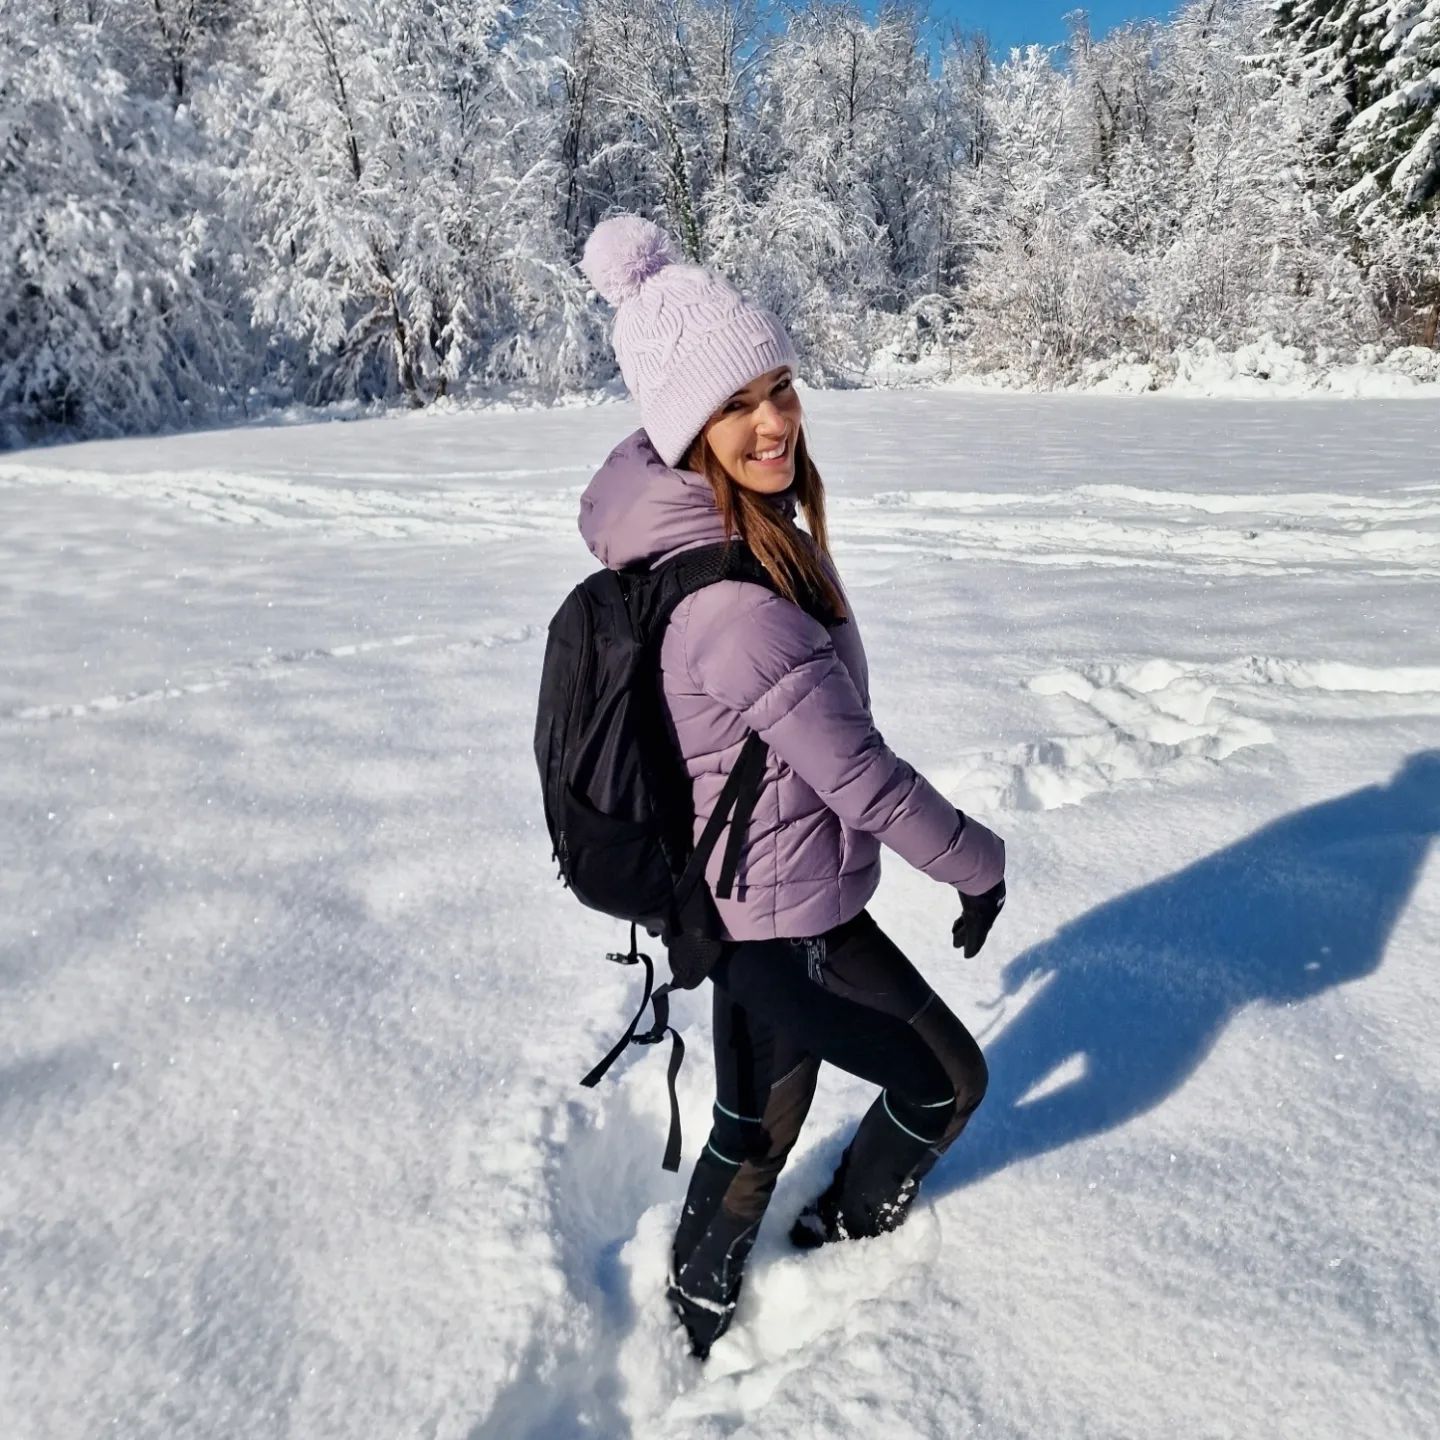 Nina Pušlar na snegu. Vir: Instagram